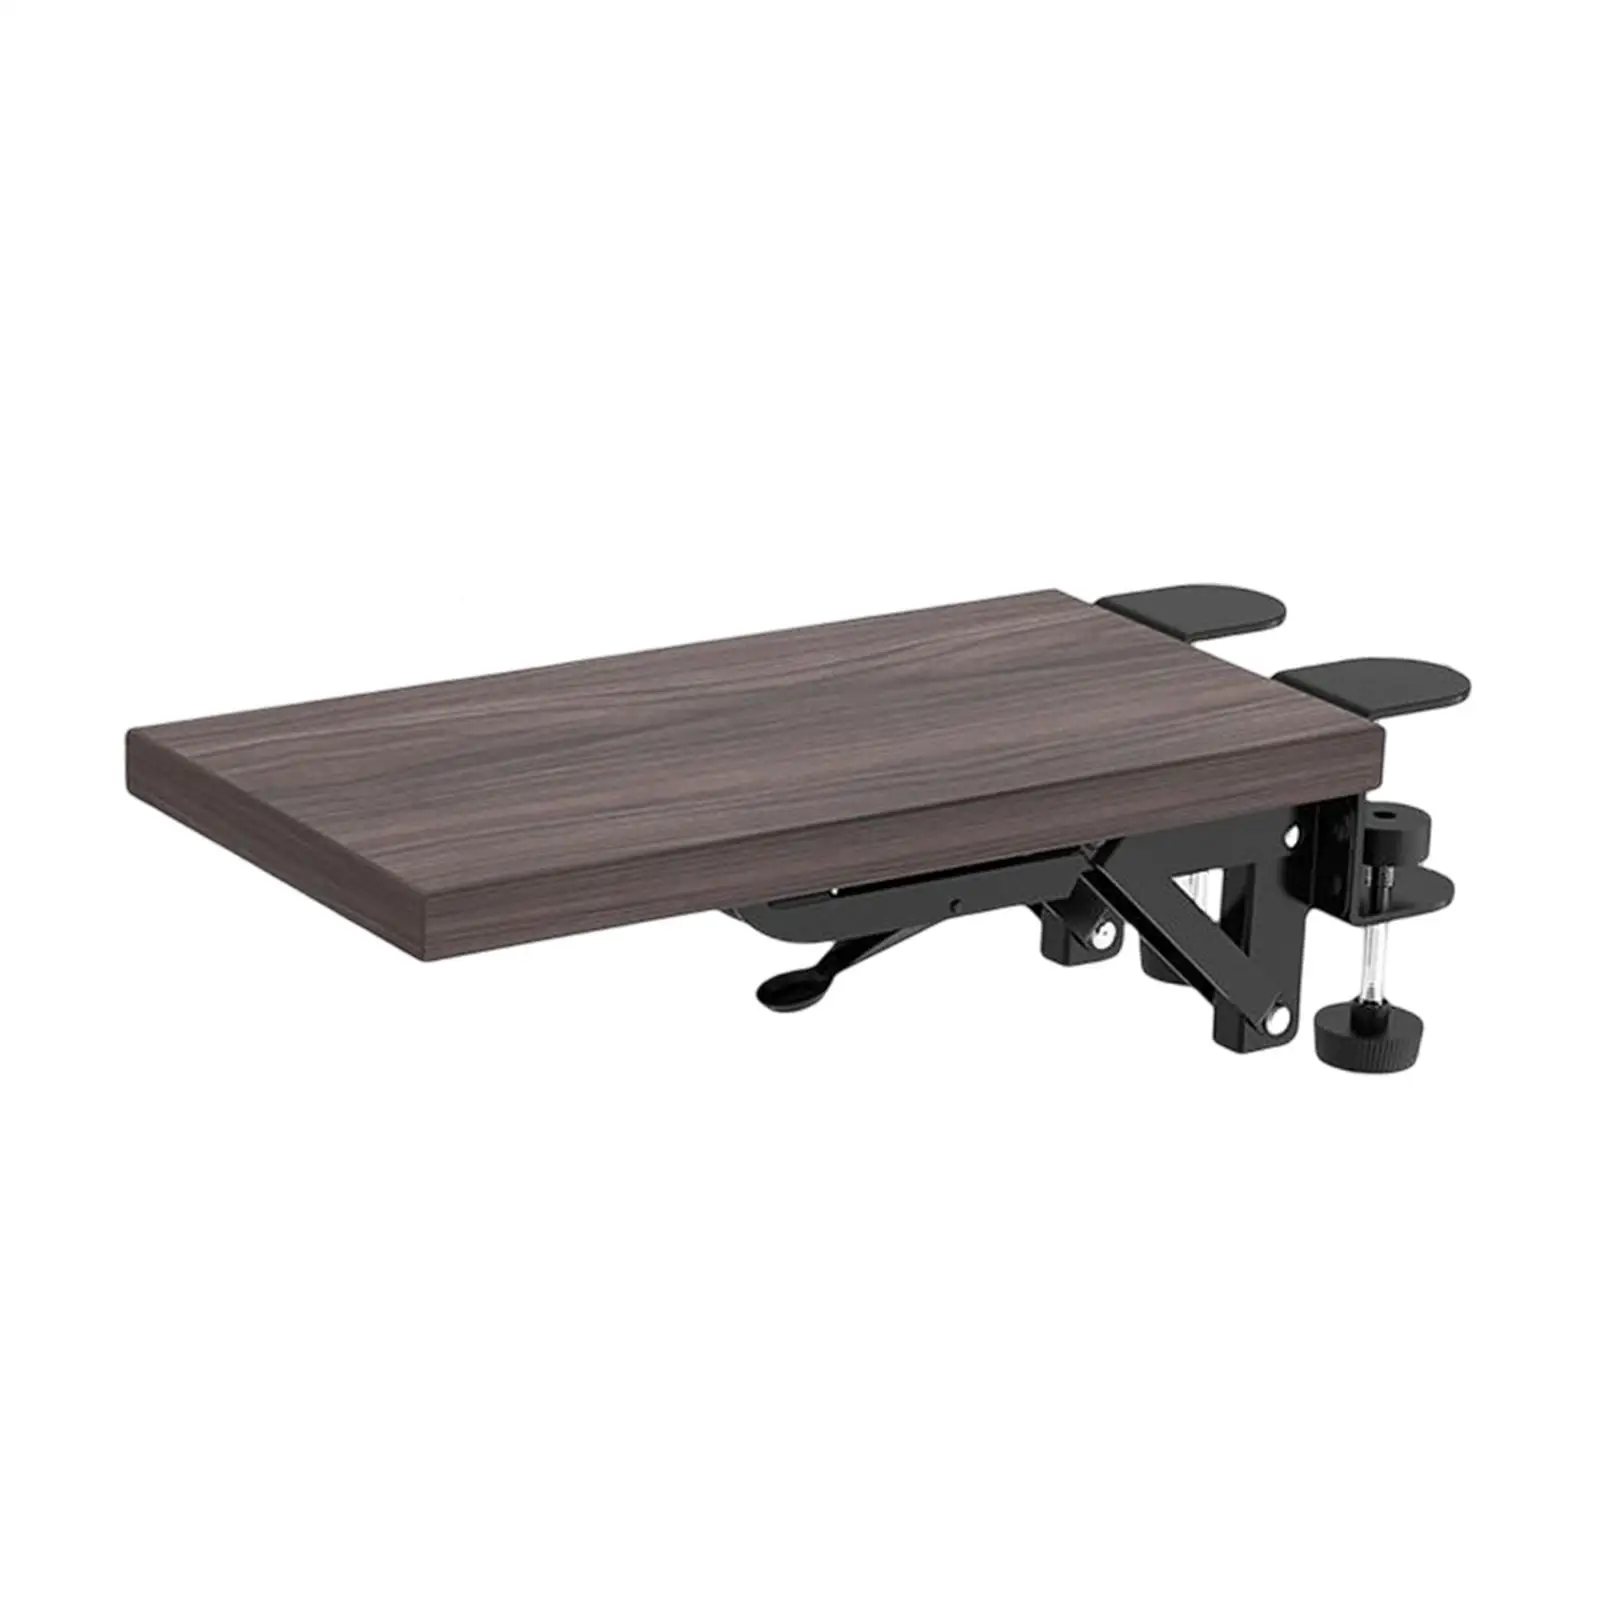 Wood Computer Arm Bracket Wrist Rest Convenient Folding Ergonomic Comfortable Extension Board for Office Home Chair Table Desk